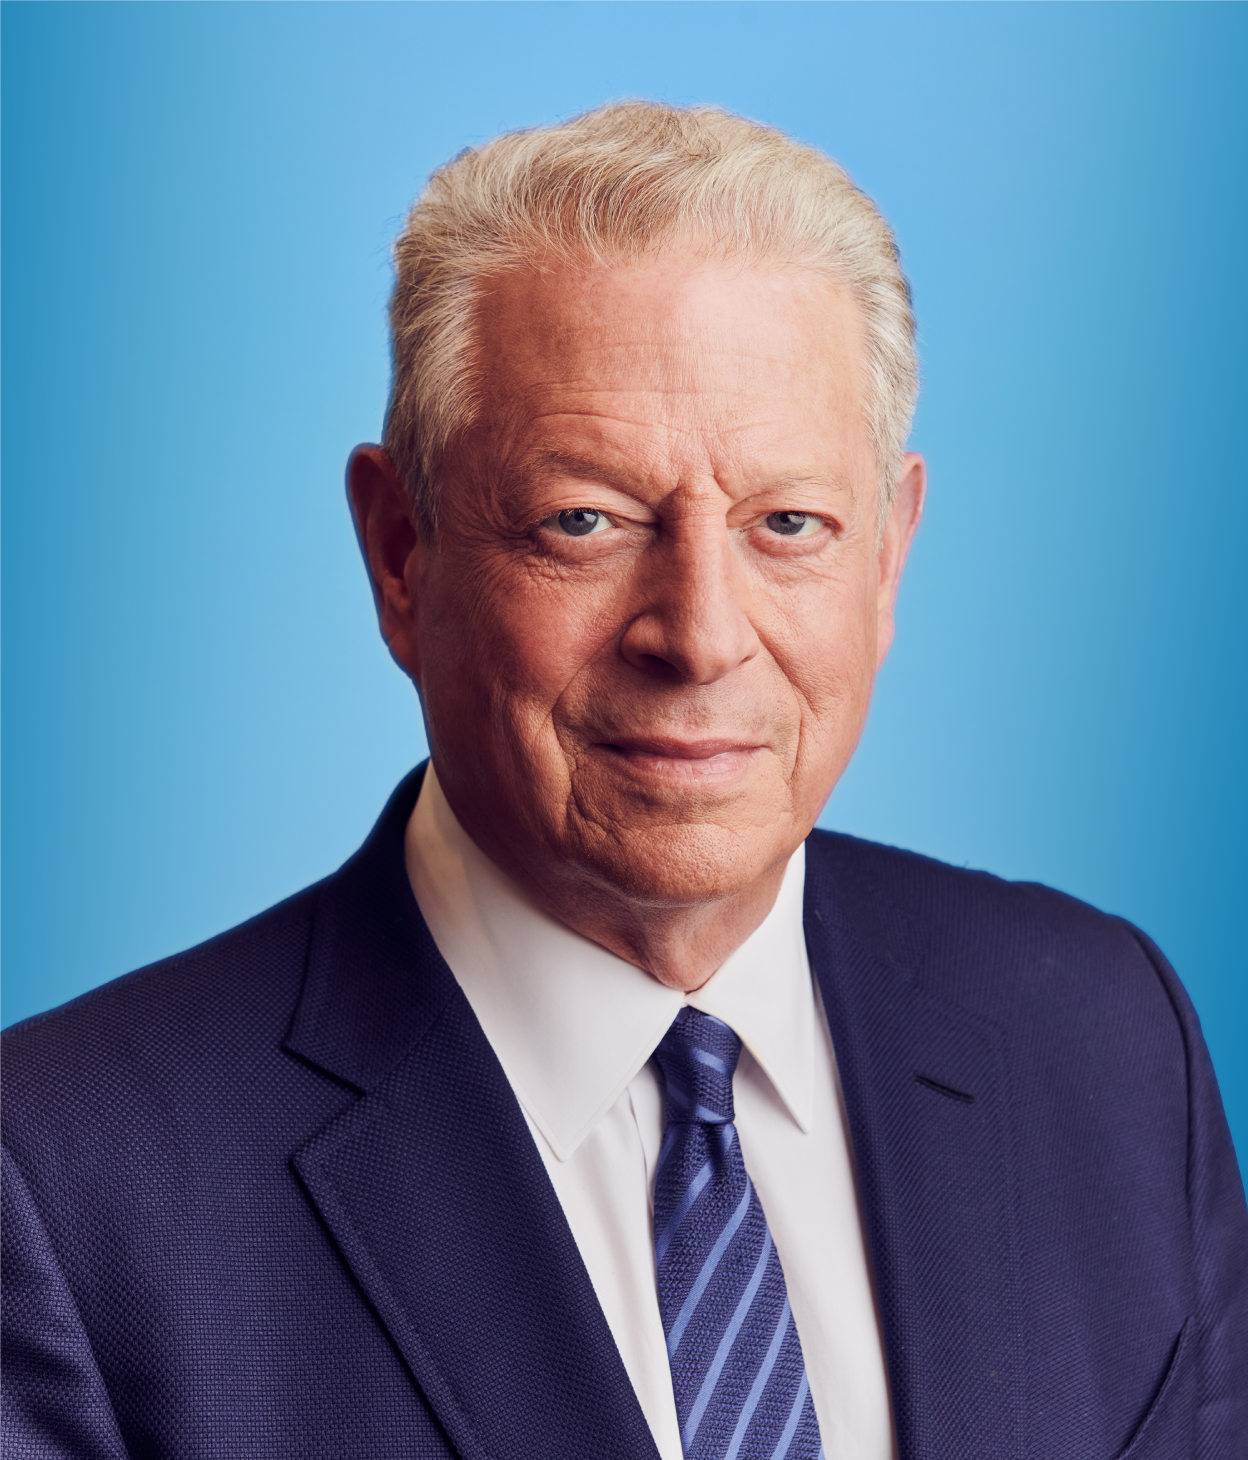 Large headshot of Al Gore with Trustweek branded overlay